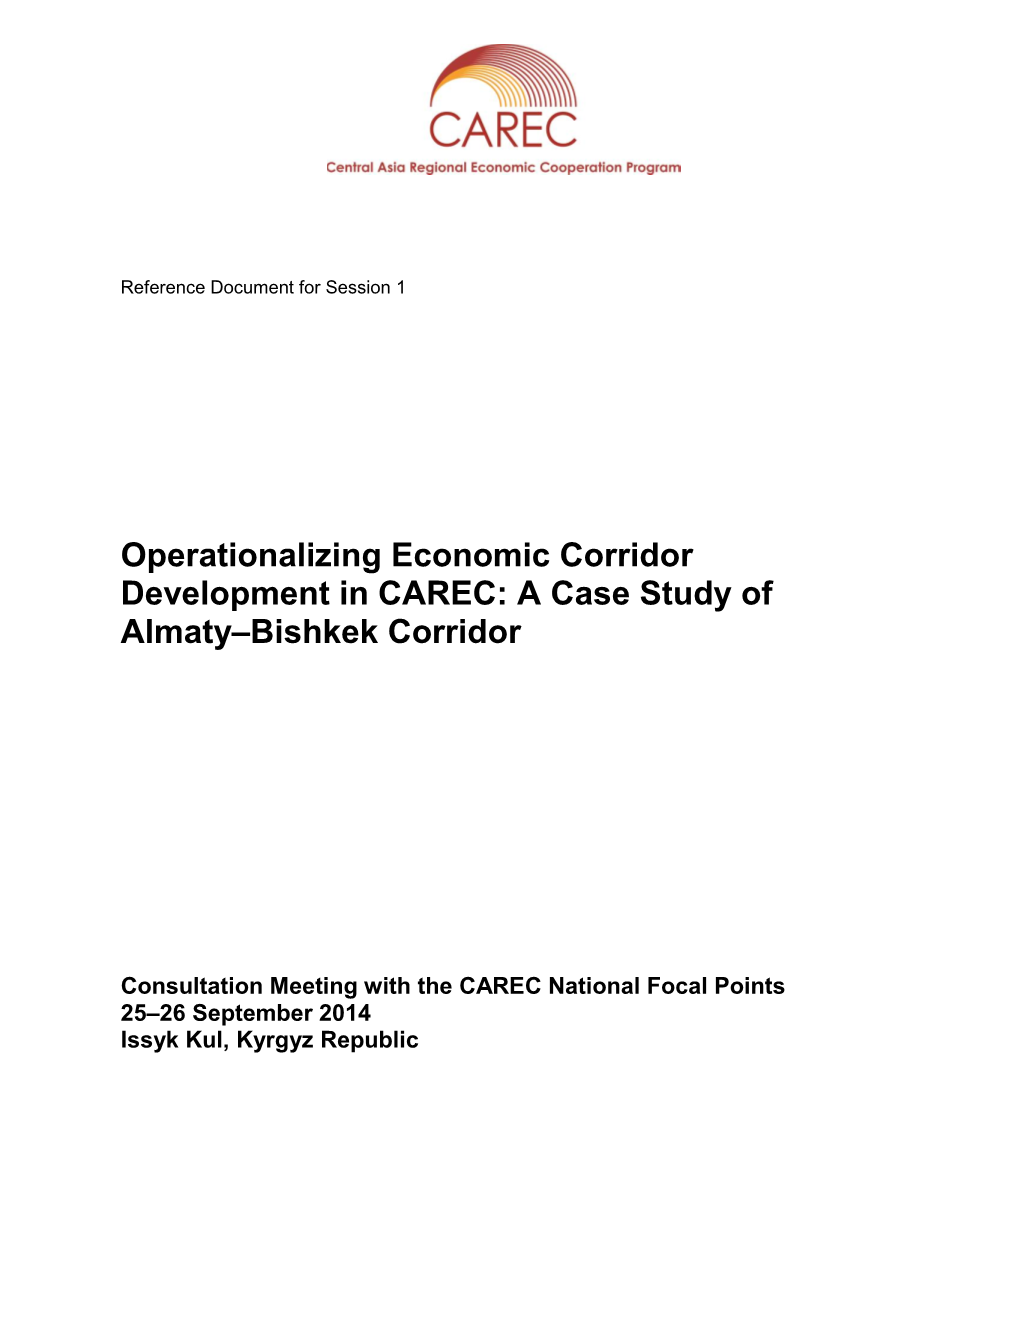 Operationalizing Economic Corridor Development in CAREC: a Case Study of Almaty–Bishkek Corridor